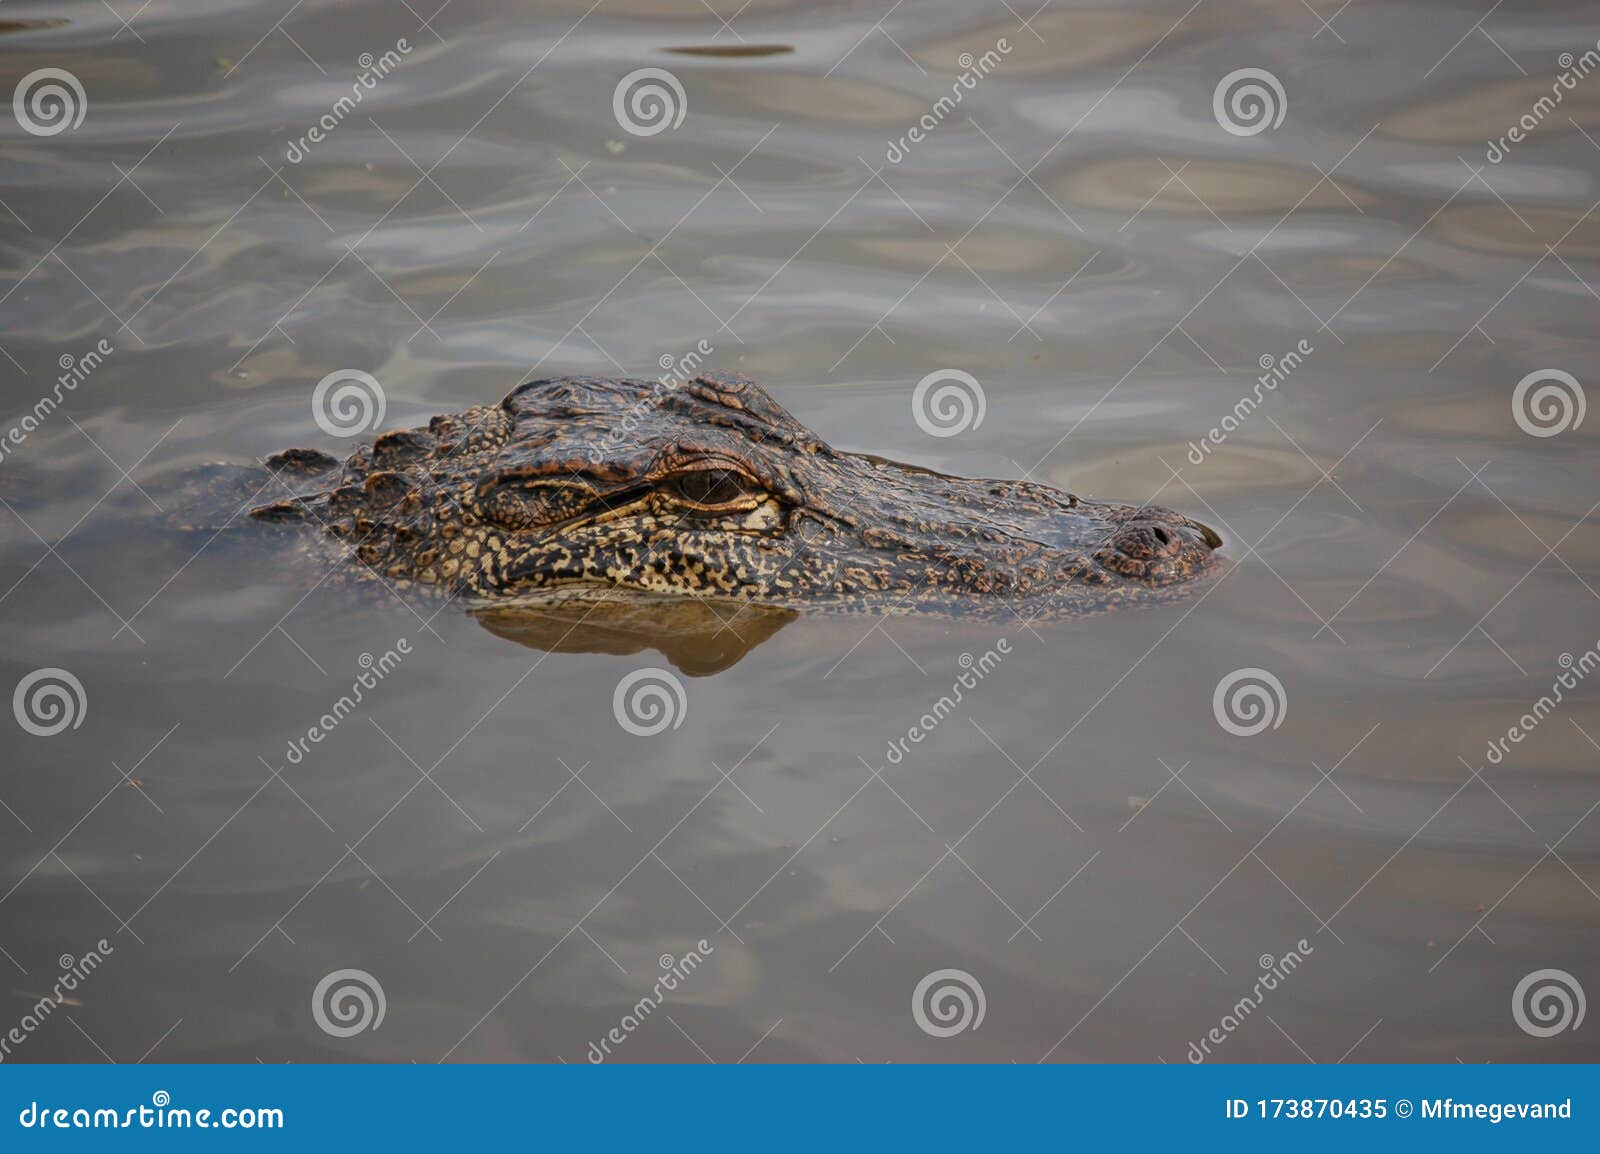 alligator at avery island, south louisiana